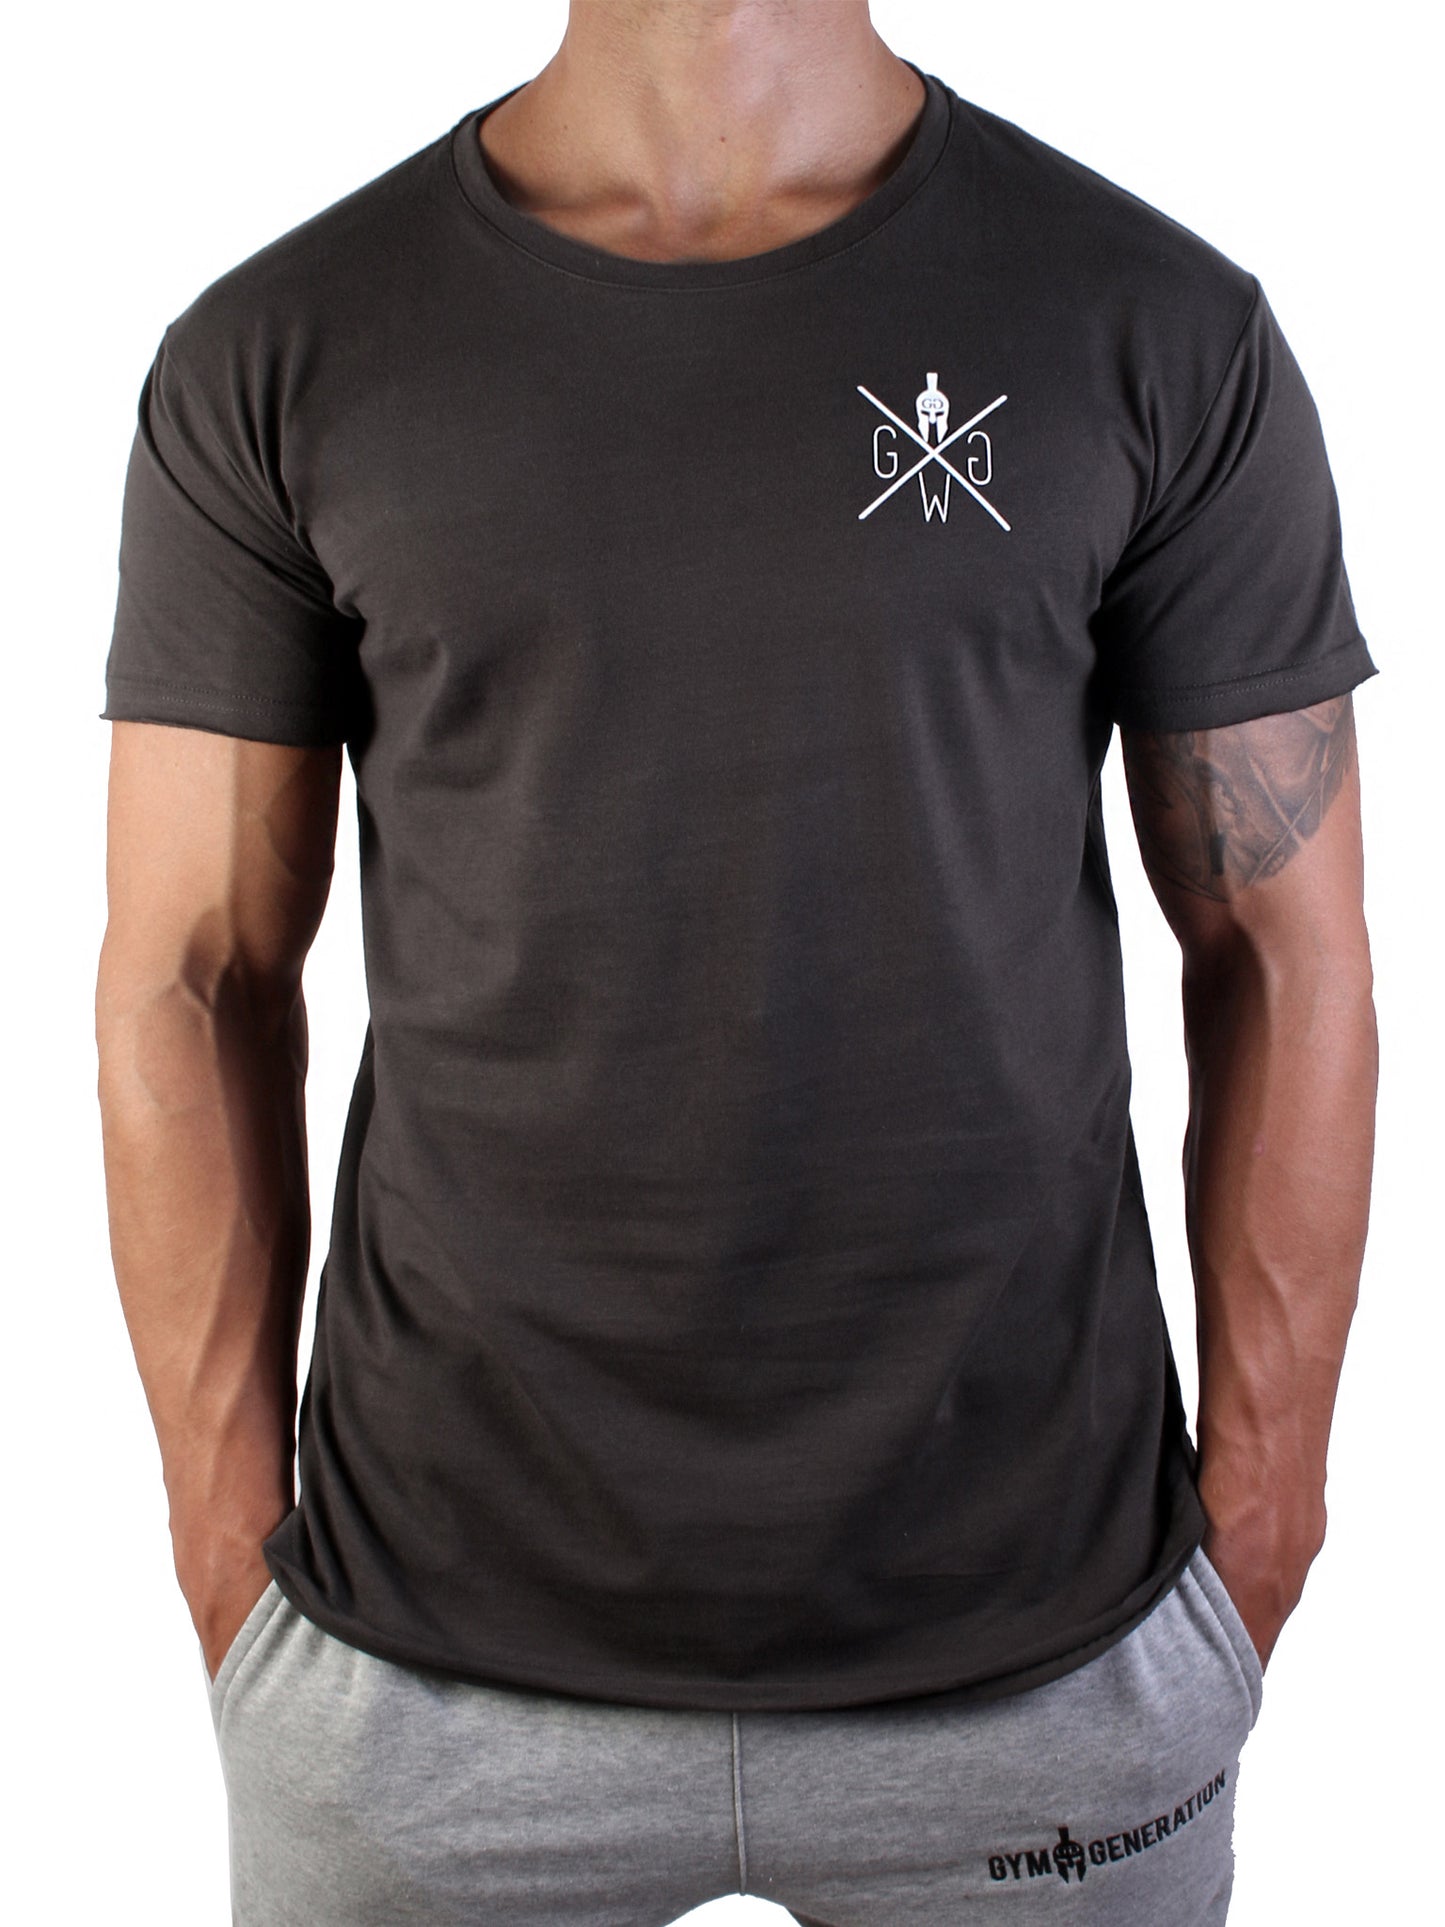 Urban Warrior T-Shirt - Grey